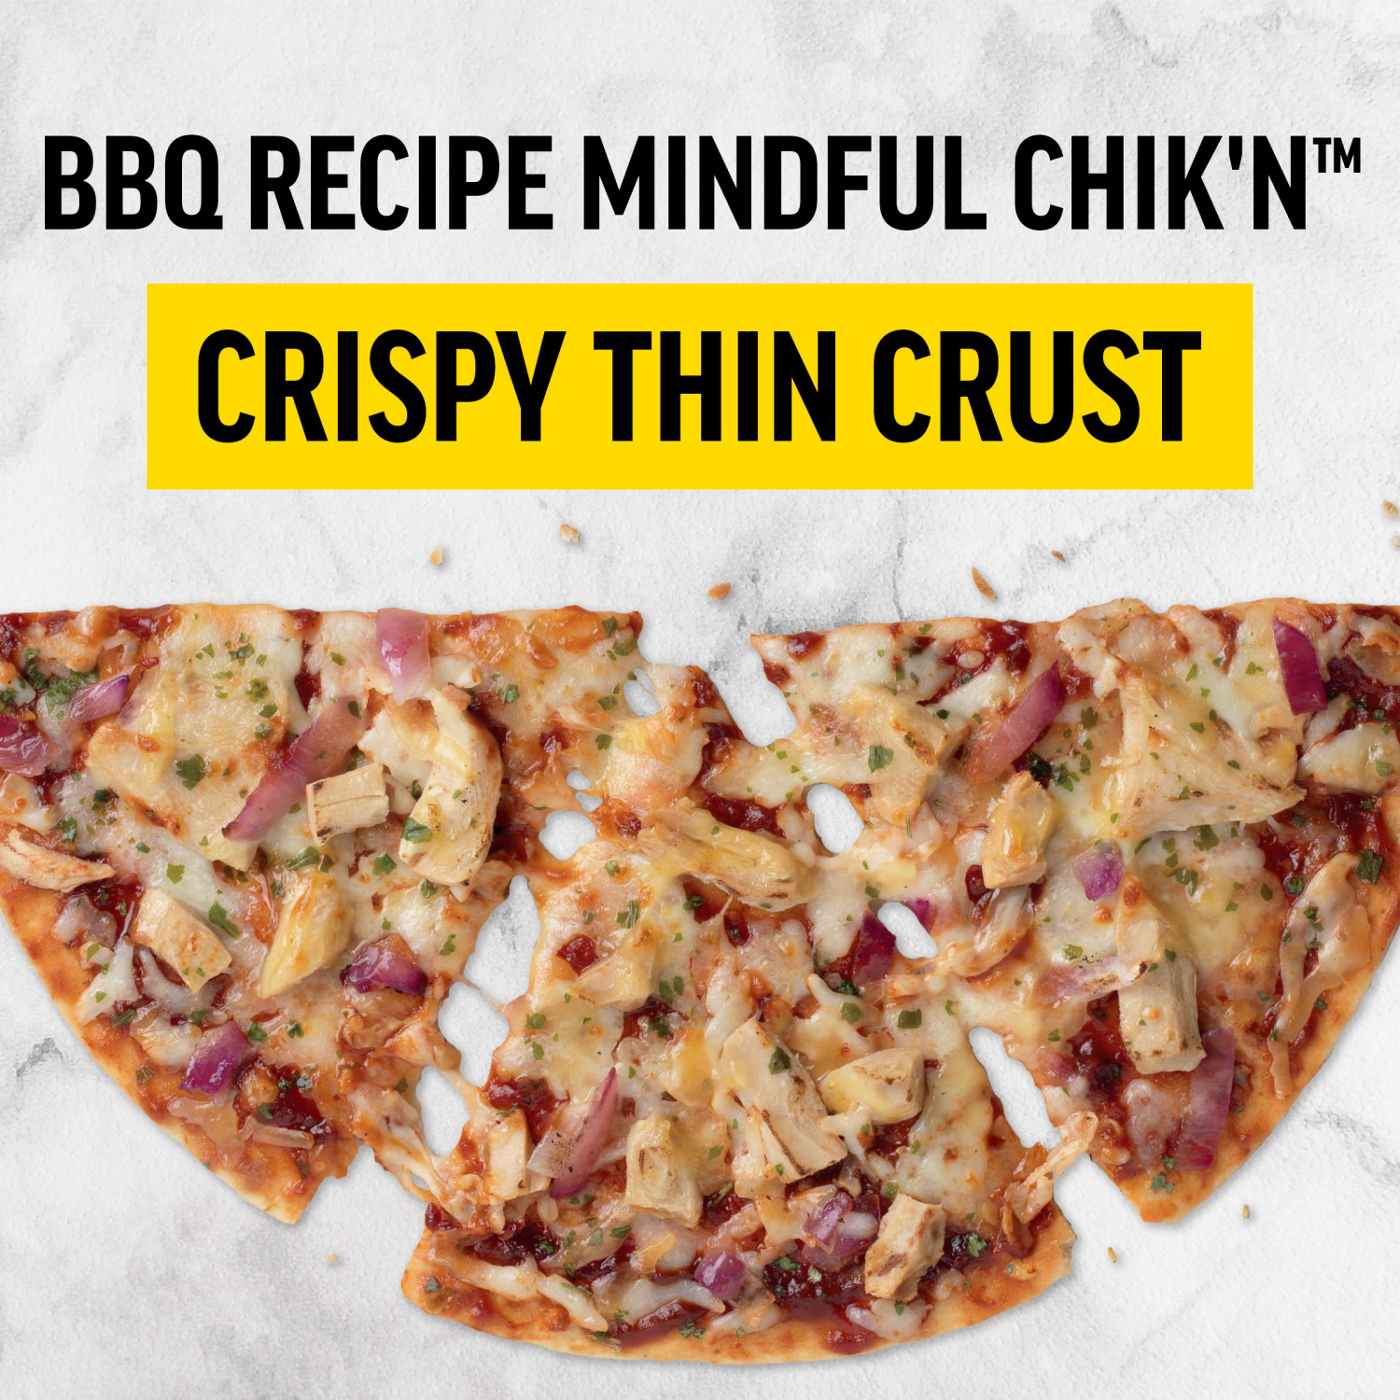 California Pizza Kitchen BBQ Recipe Mindful Chik'n Crispy Thin Crust Pizza; image 2 of 7